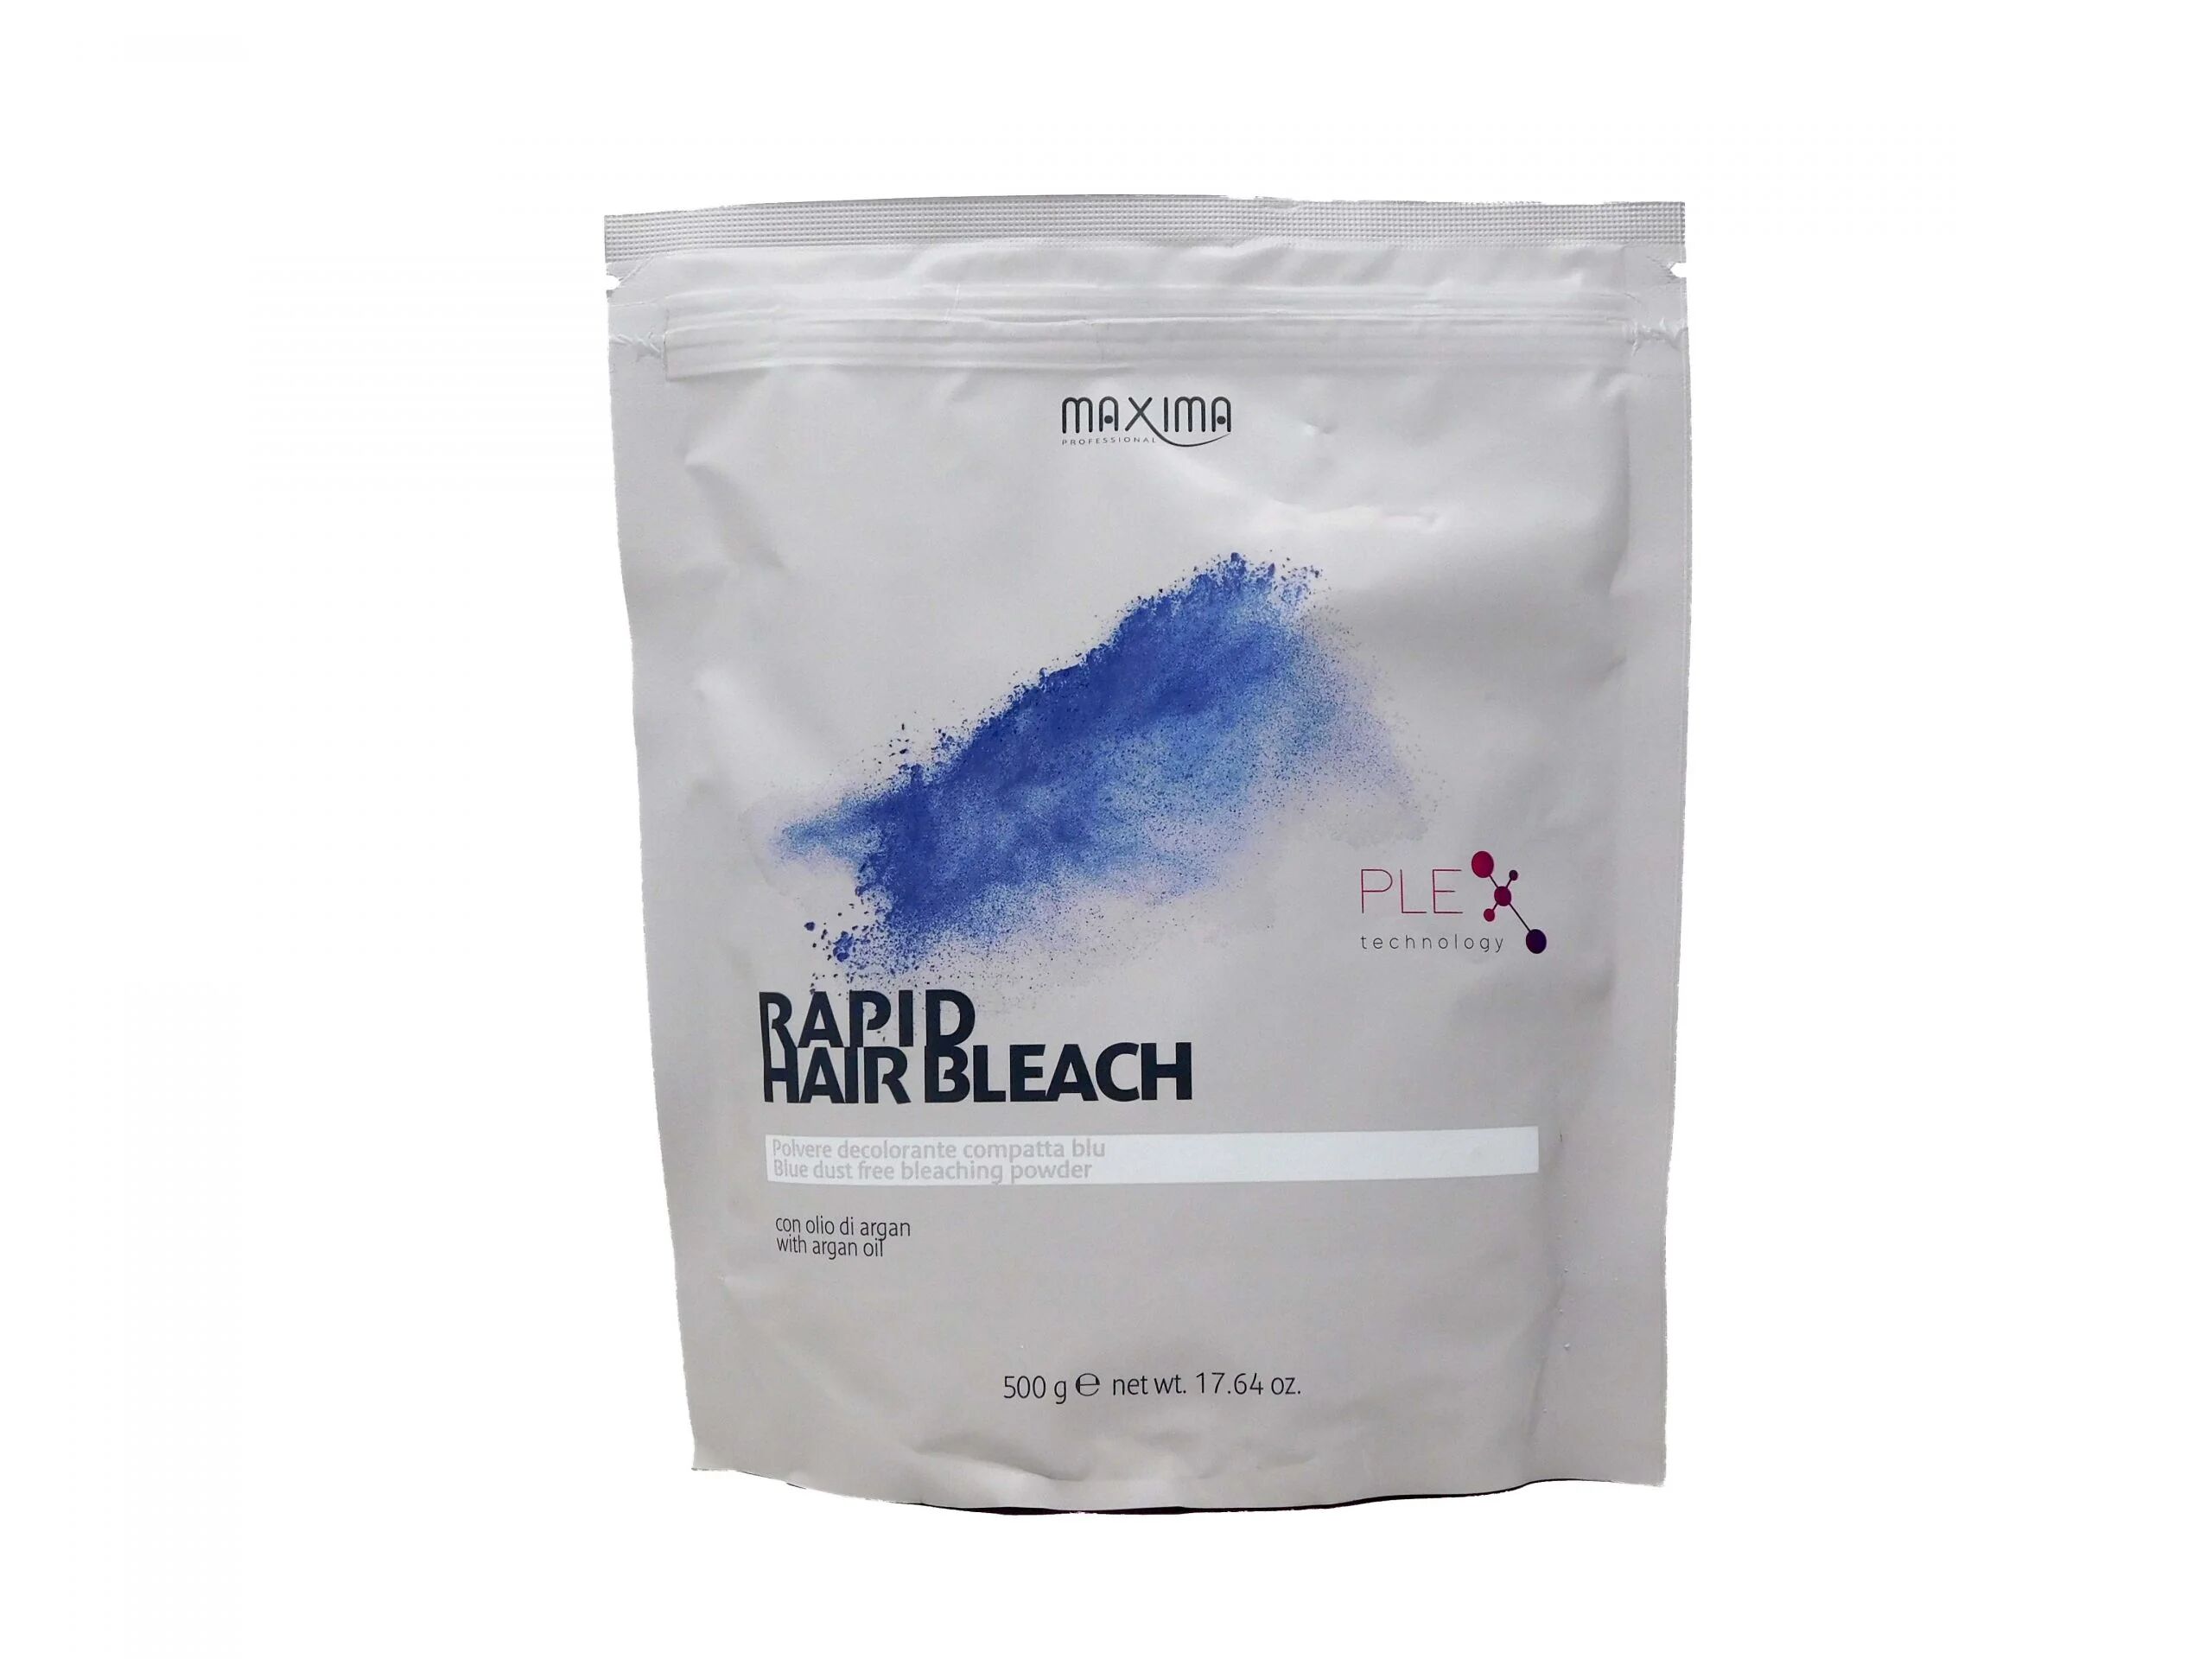 maxima professional maxima polvere decolorante rapid hair bleach blu 500 ml